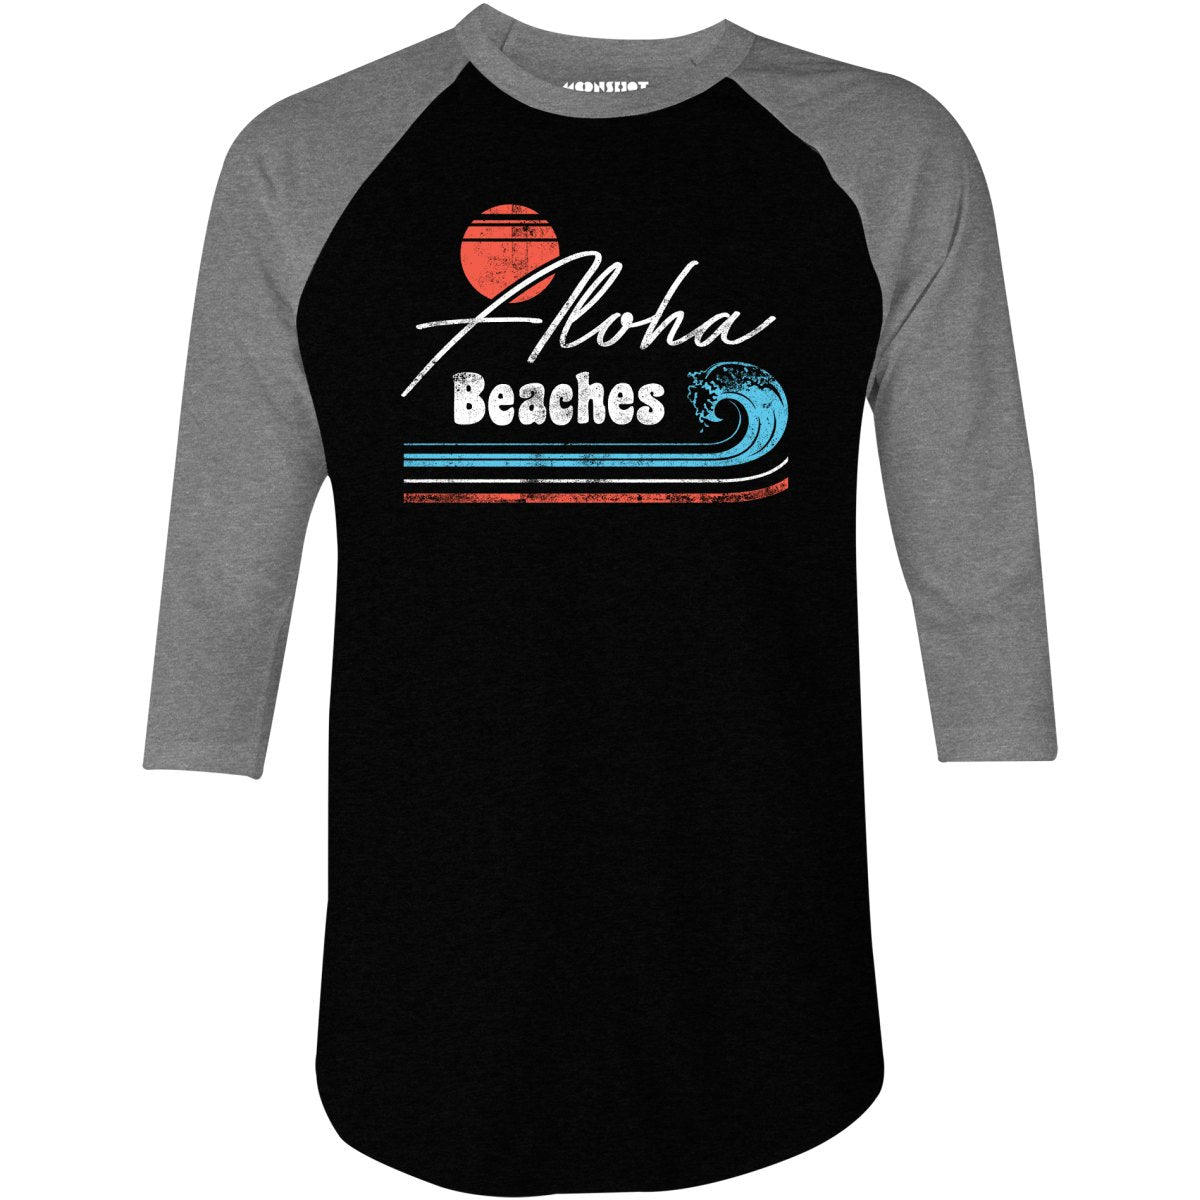 Aloha Beaches - 3/4 Sleeve Raglan T-Shirt